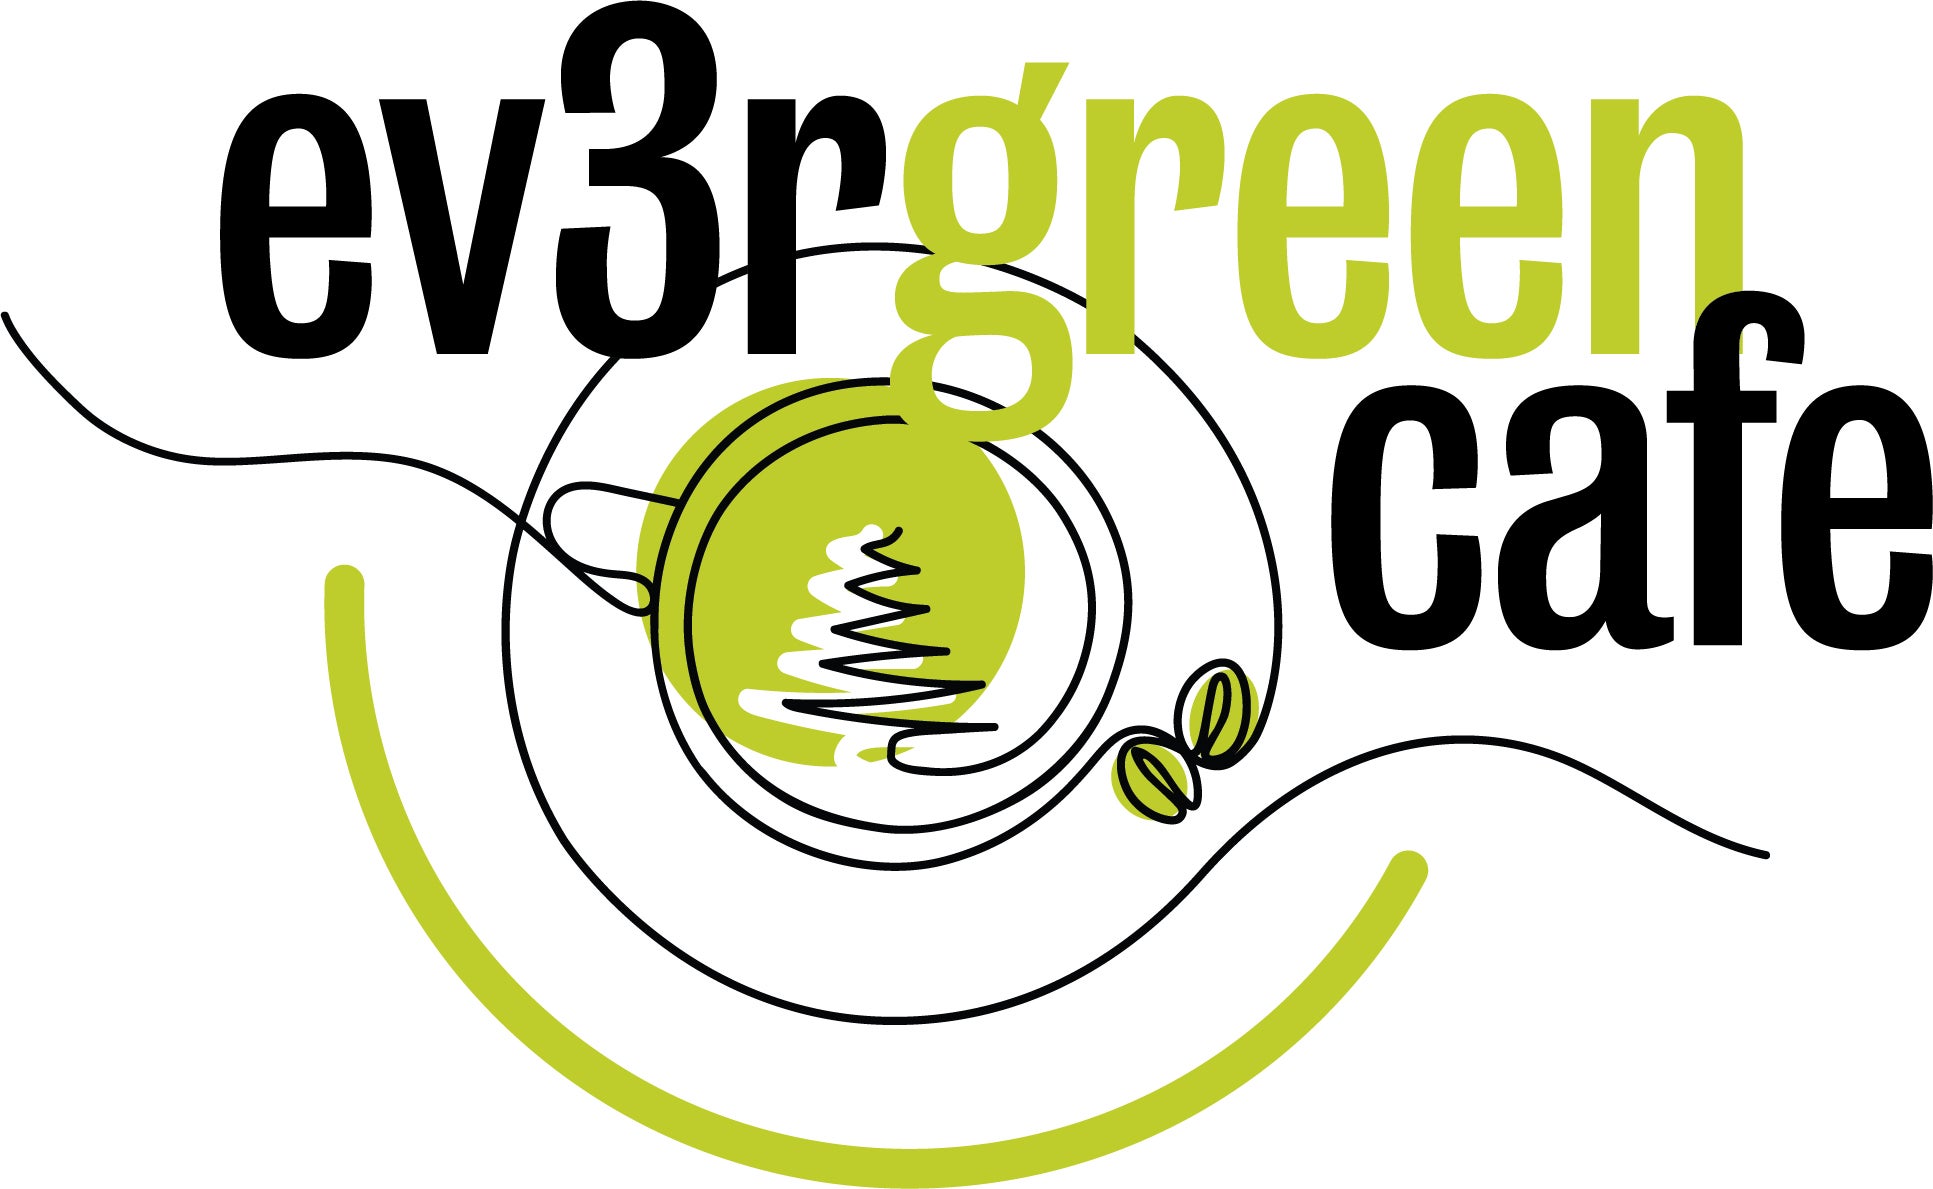 ev3rgreen cafe logo